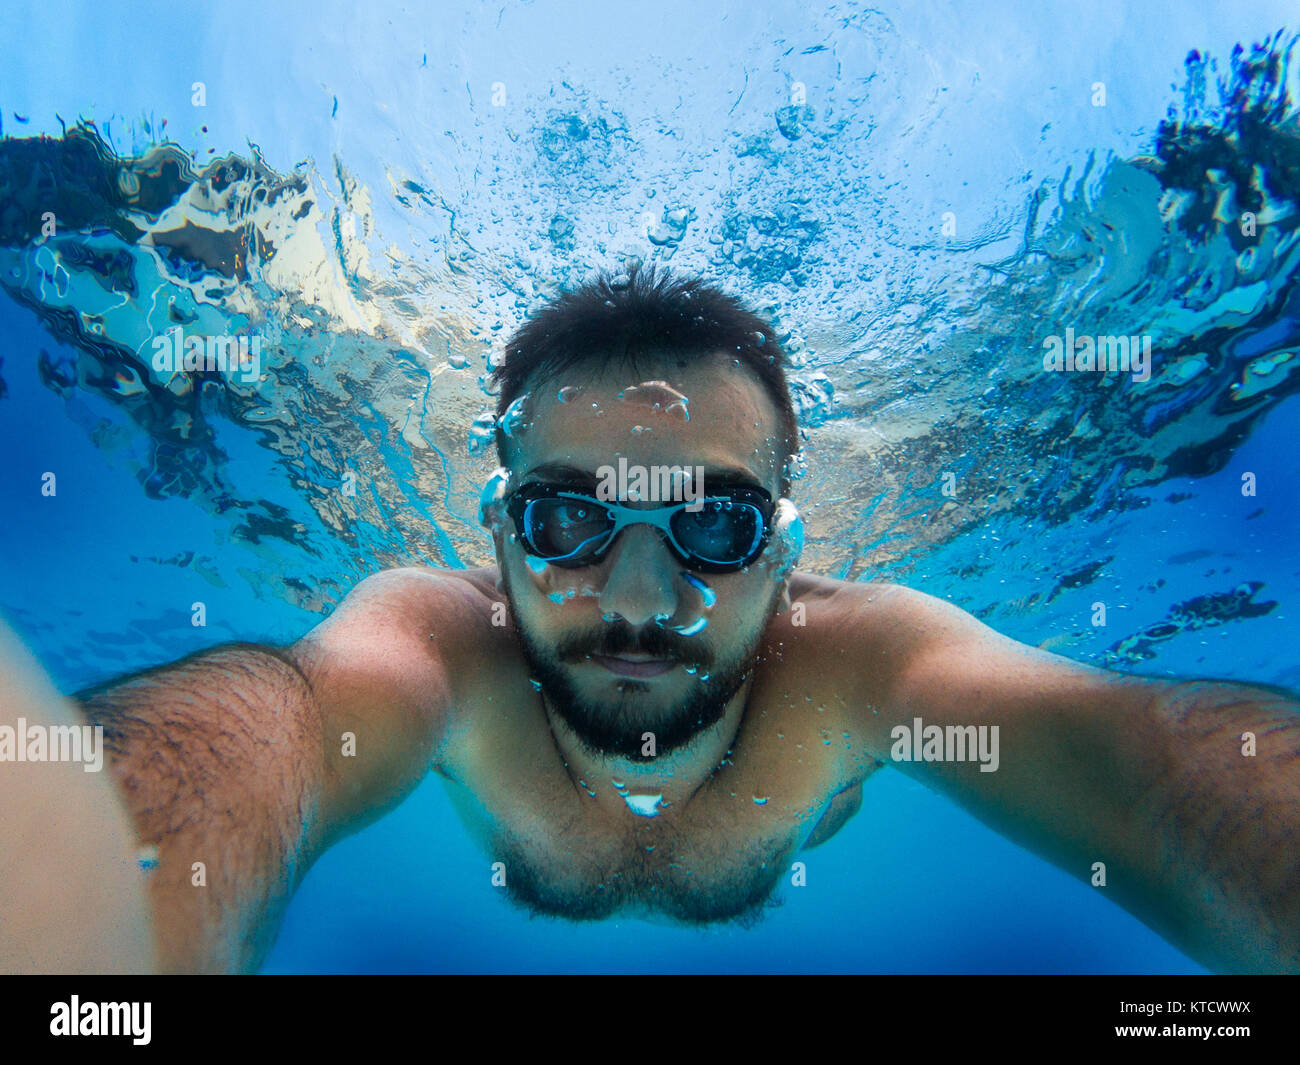 https://c8.alamy.com/compes/ktcwwx/el-hombre-bucear-en-la-piscina-y-tomar-un-selfie-con-gafas-de-natacion-ktcwwx.jpg